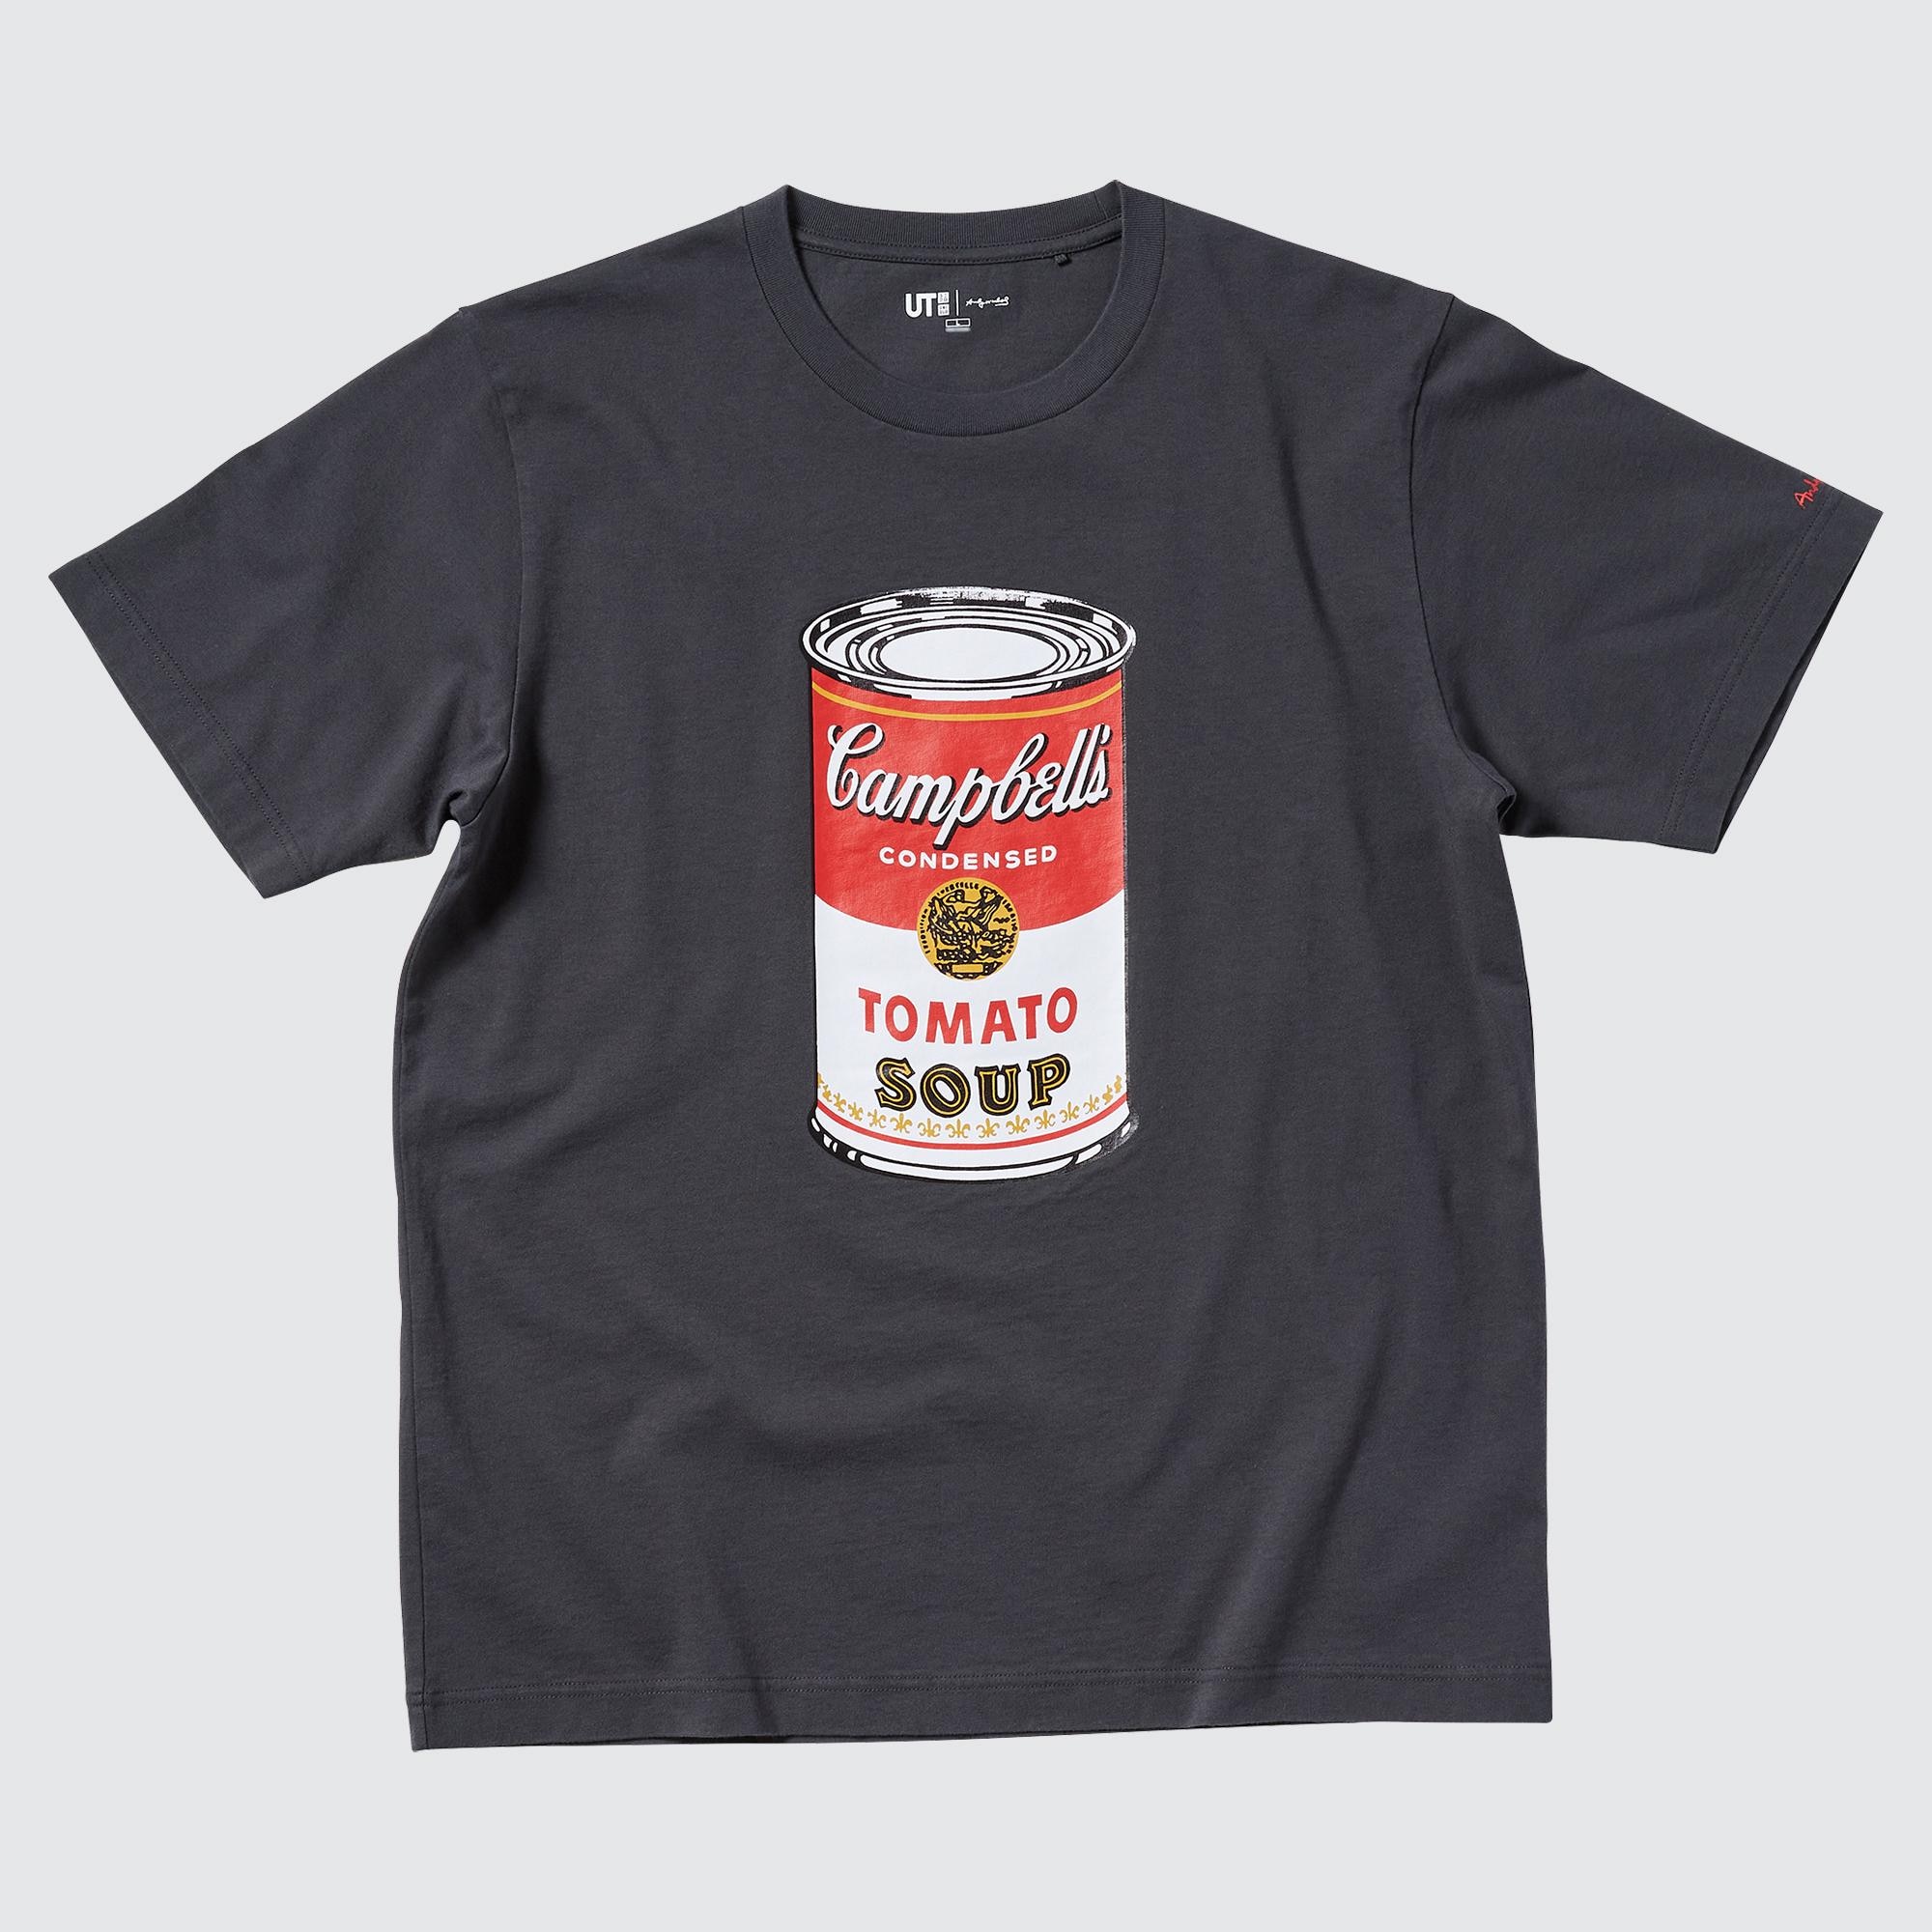 Andy Warhol UT (Short-Sleeve Graphic T-Shirt) | UNIQLO US